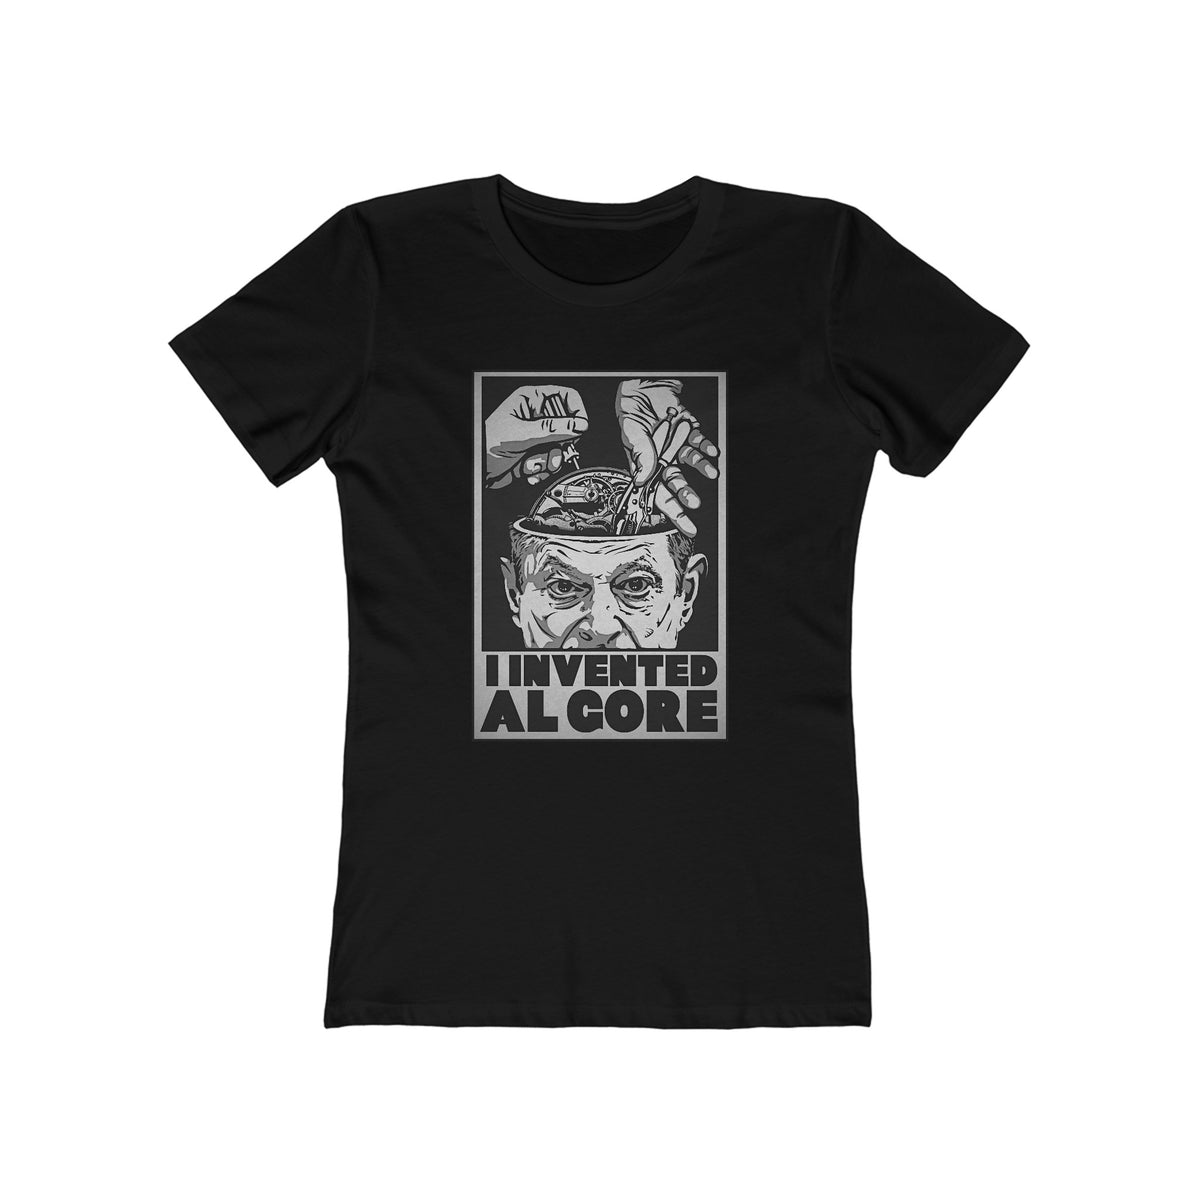 I Invented Al Gore - Women’s T-Shirt